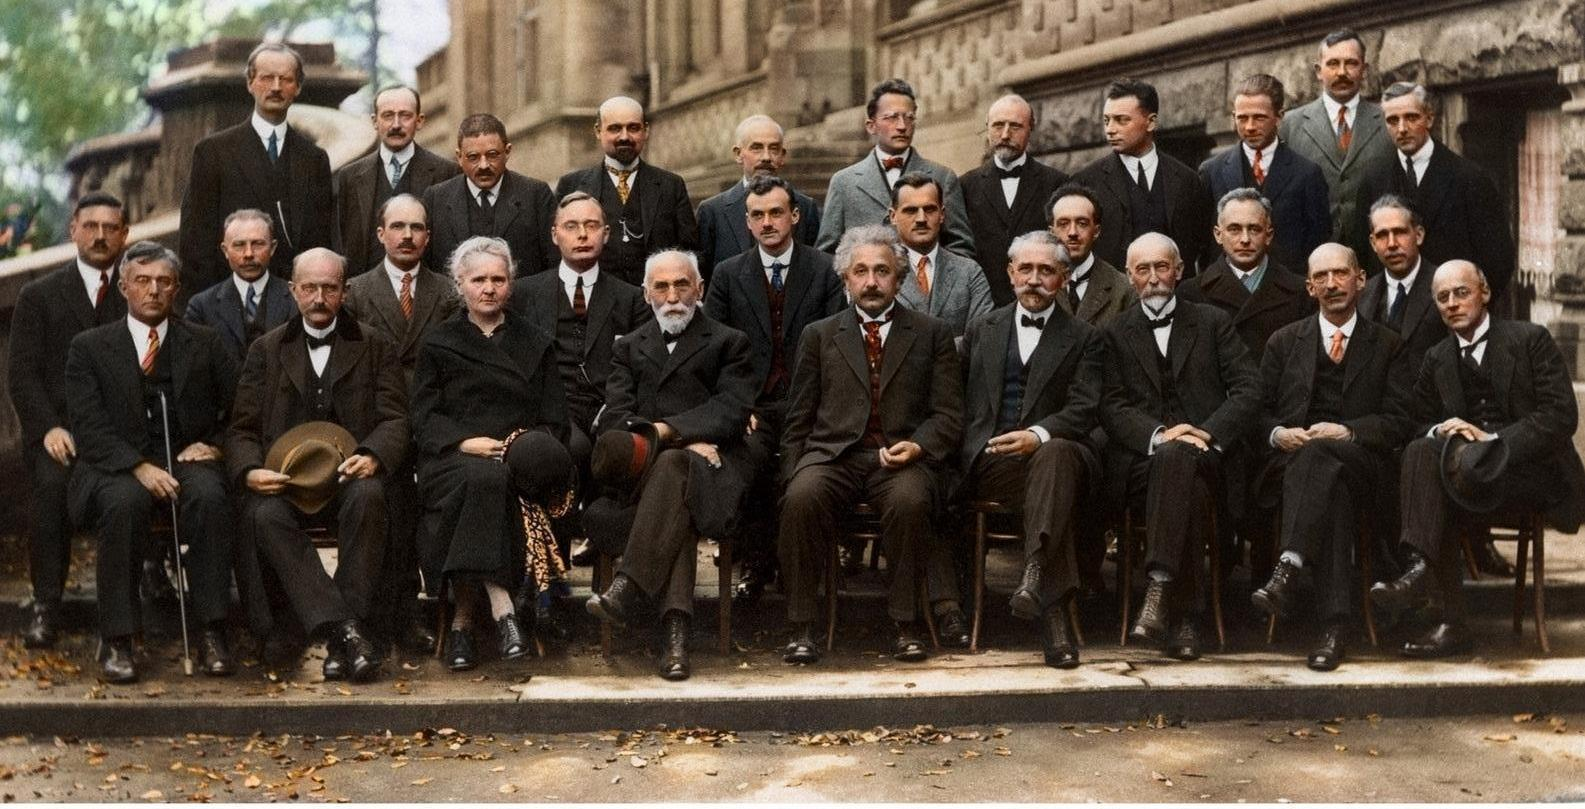 Solvayská konference, Brusel, 1927 základy kvantové teorie pole: 1928-34 P. Jordan, E. Wigner, W. Heisenberg, W. Pauli, V. Weisskopf, R.